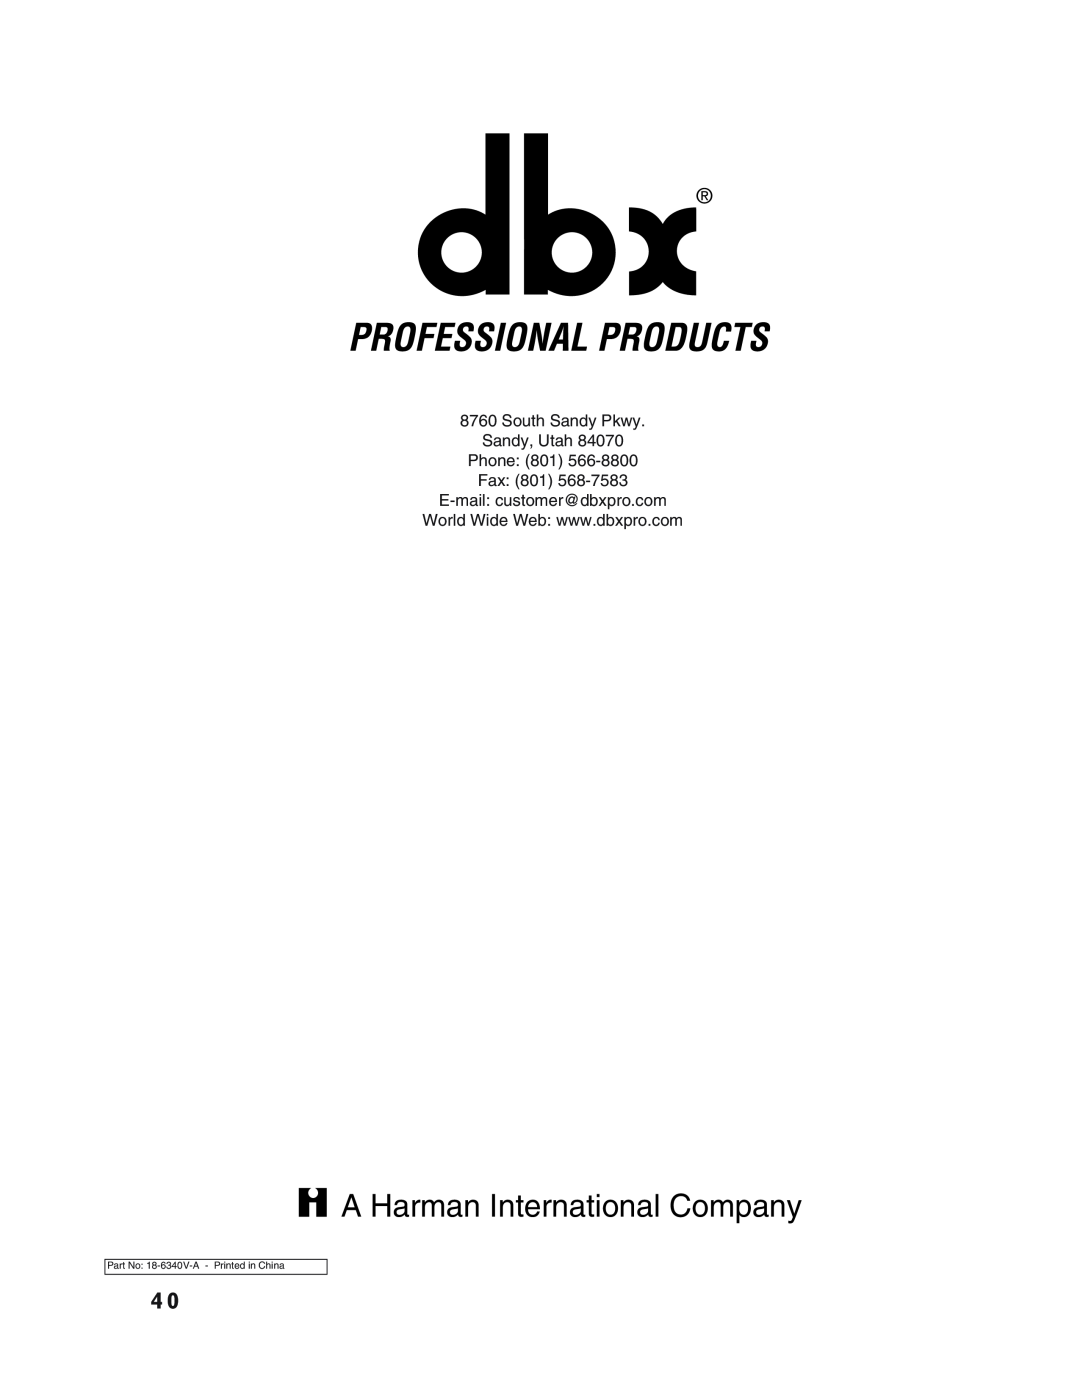 dbx Pro 12 Series operation manual A Harman International Company, South Sandy Pkwy Sandy, Utah Phone 